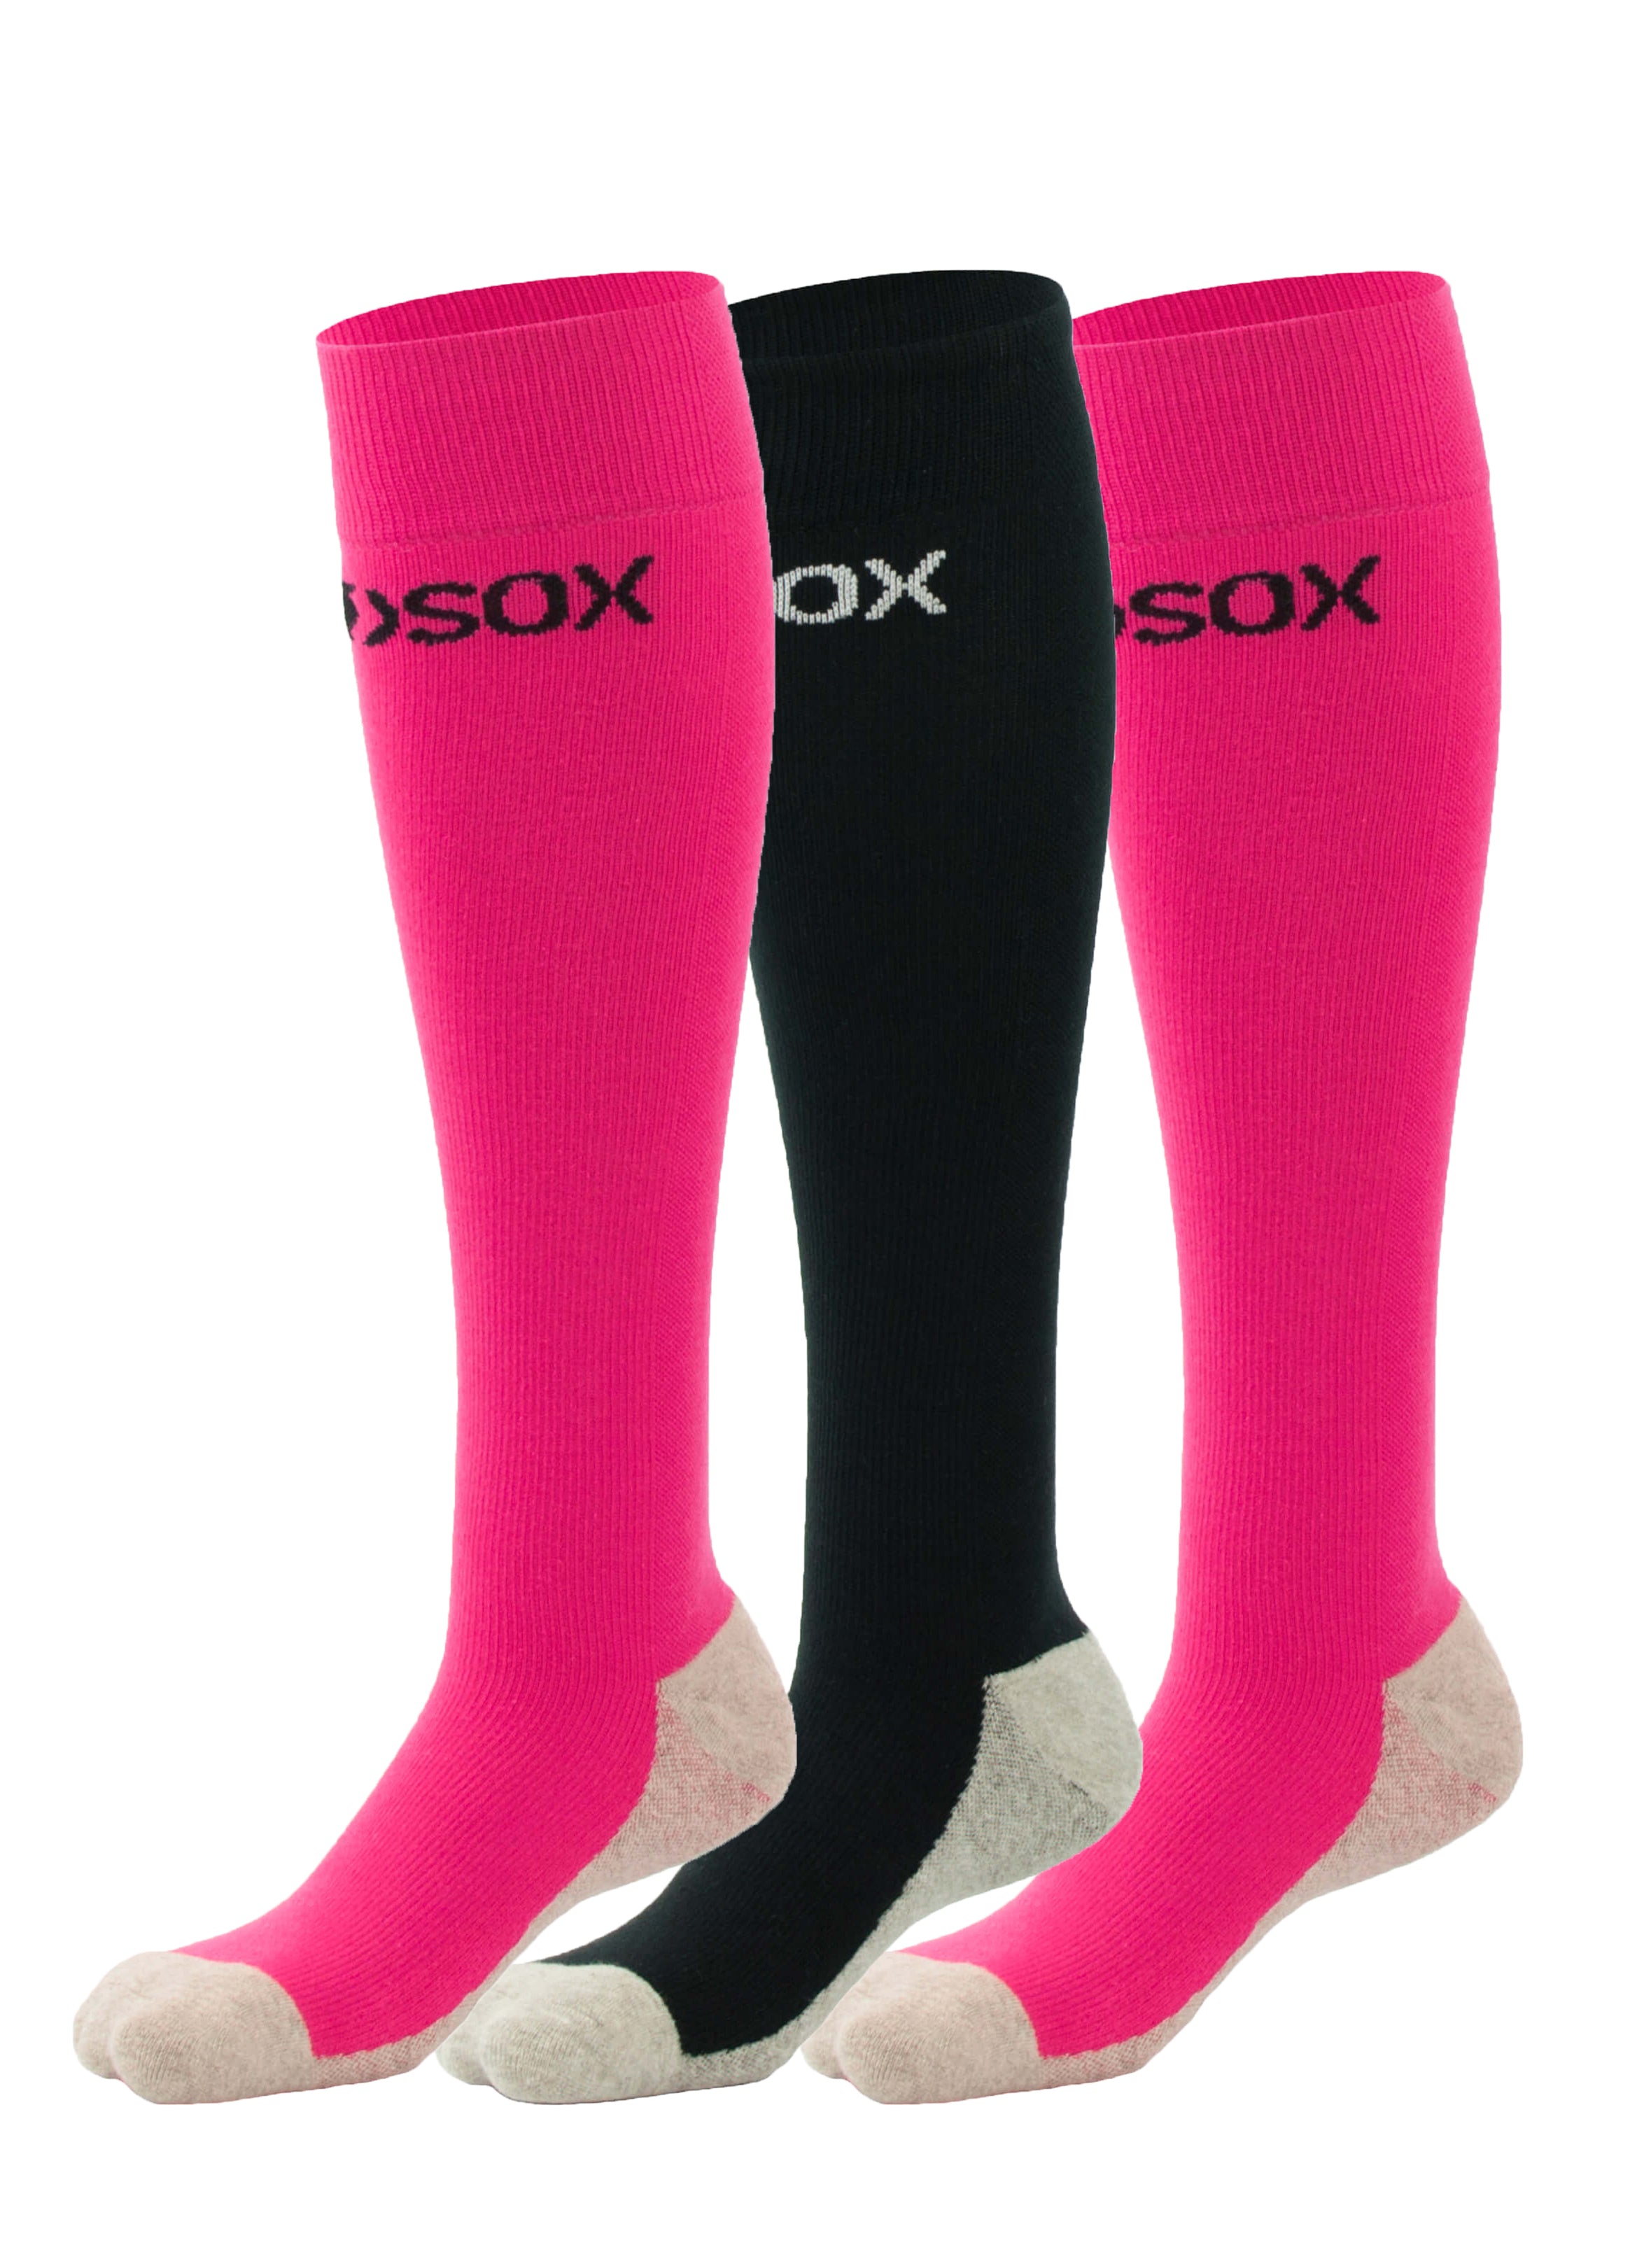 MDSOX 20-30mmHg 3PACK - Pink, Black, Pink